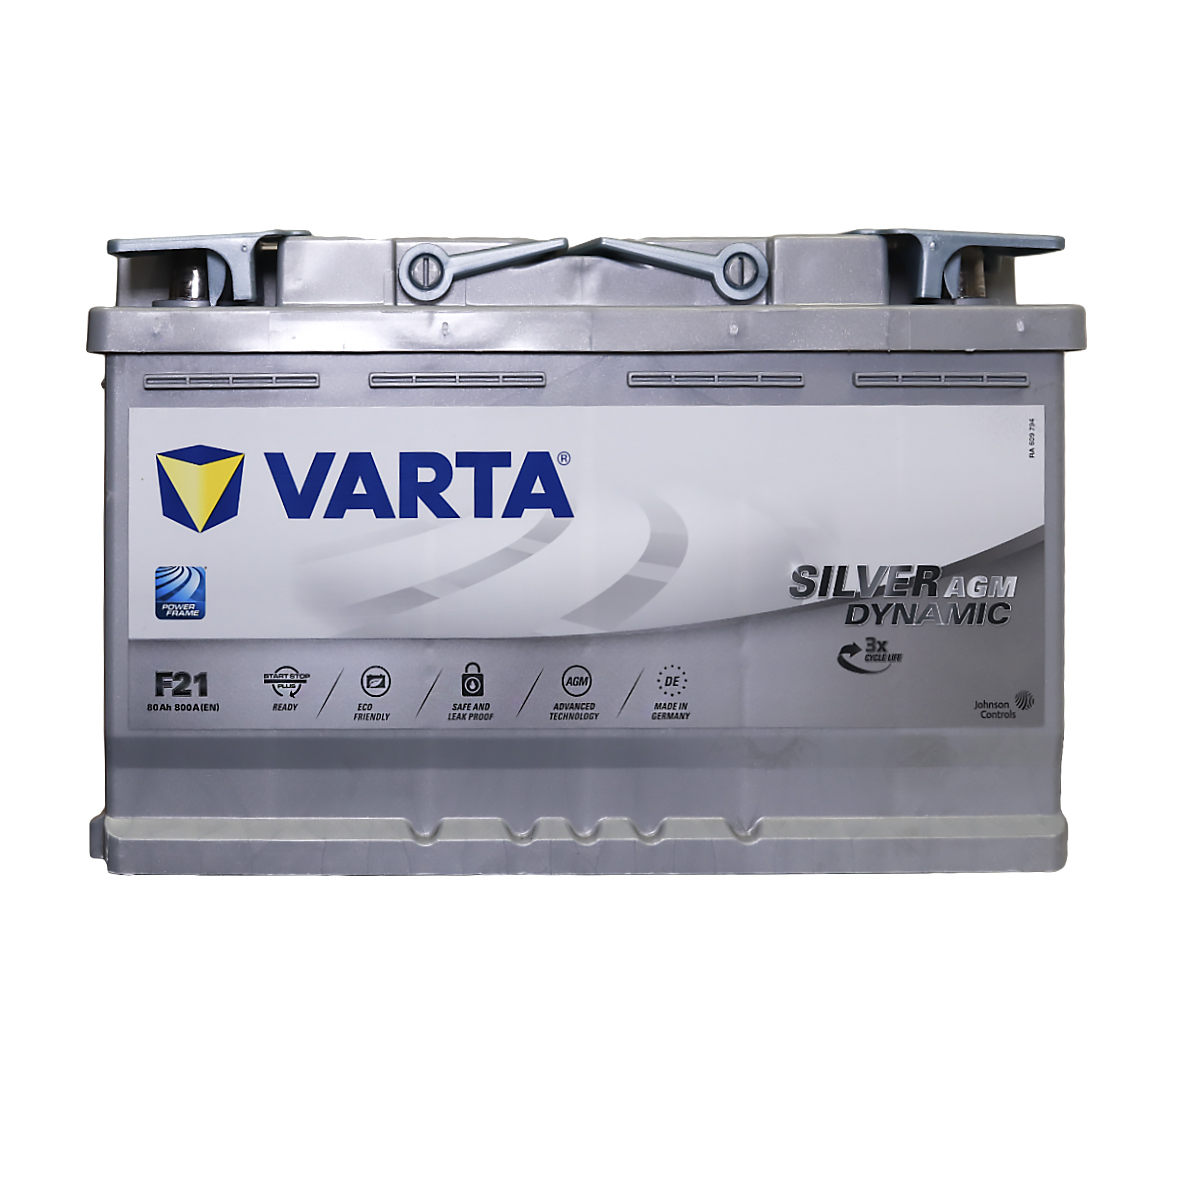 Автомобильный аккумулятор dynamic. 580901080 Varta. Varta Silver Dynamic AGM f21. 580901080 Varta аккумулятор. Аккумулятор Varta Silver Dynamic AGM f21 (580 901 080) 315x175x190.